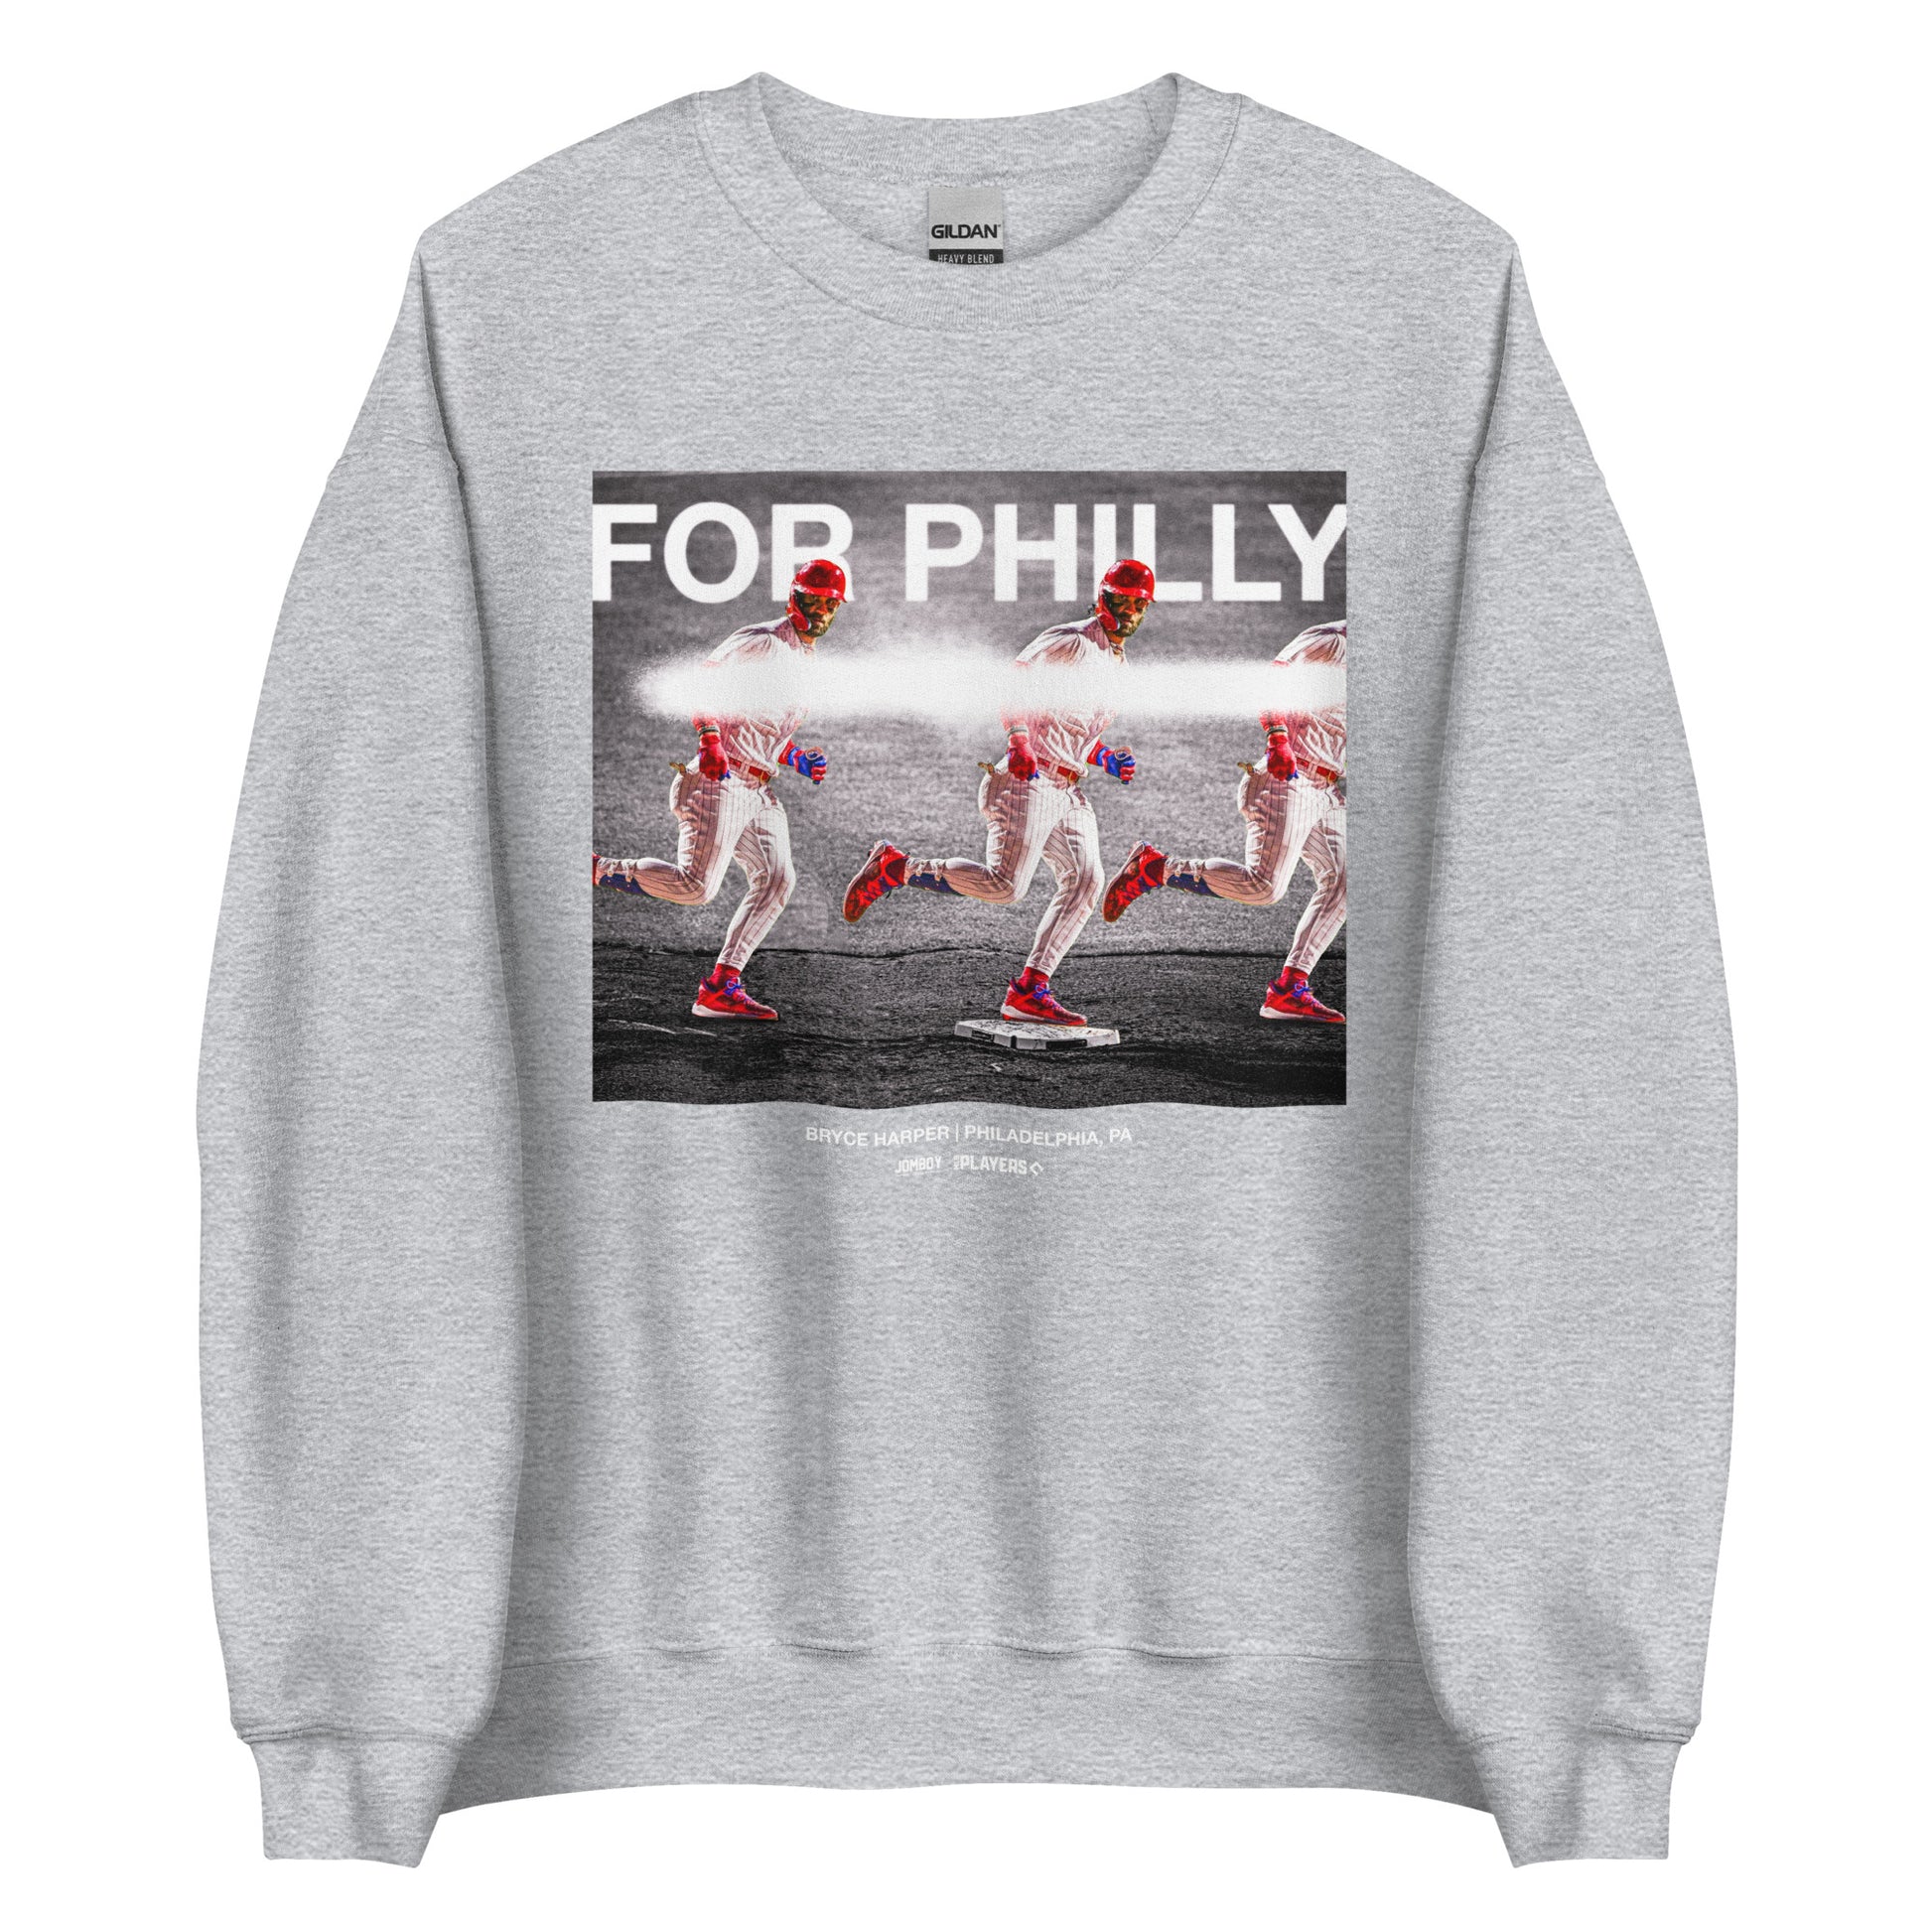 MLB Philadelphia Phillies Women's Play Ball Fashion Jersey - XS